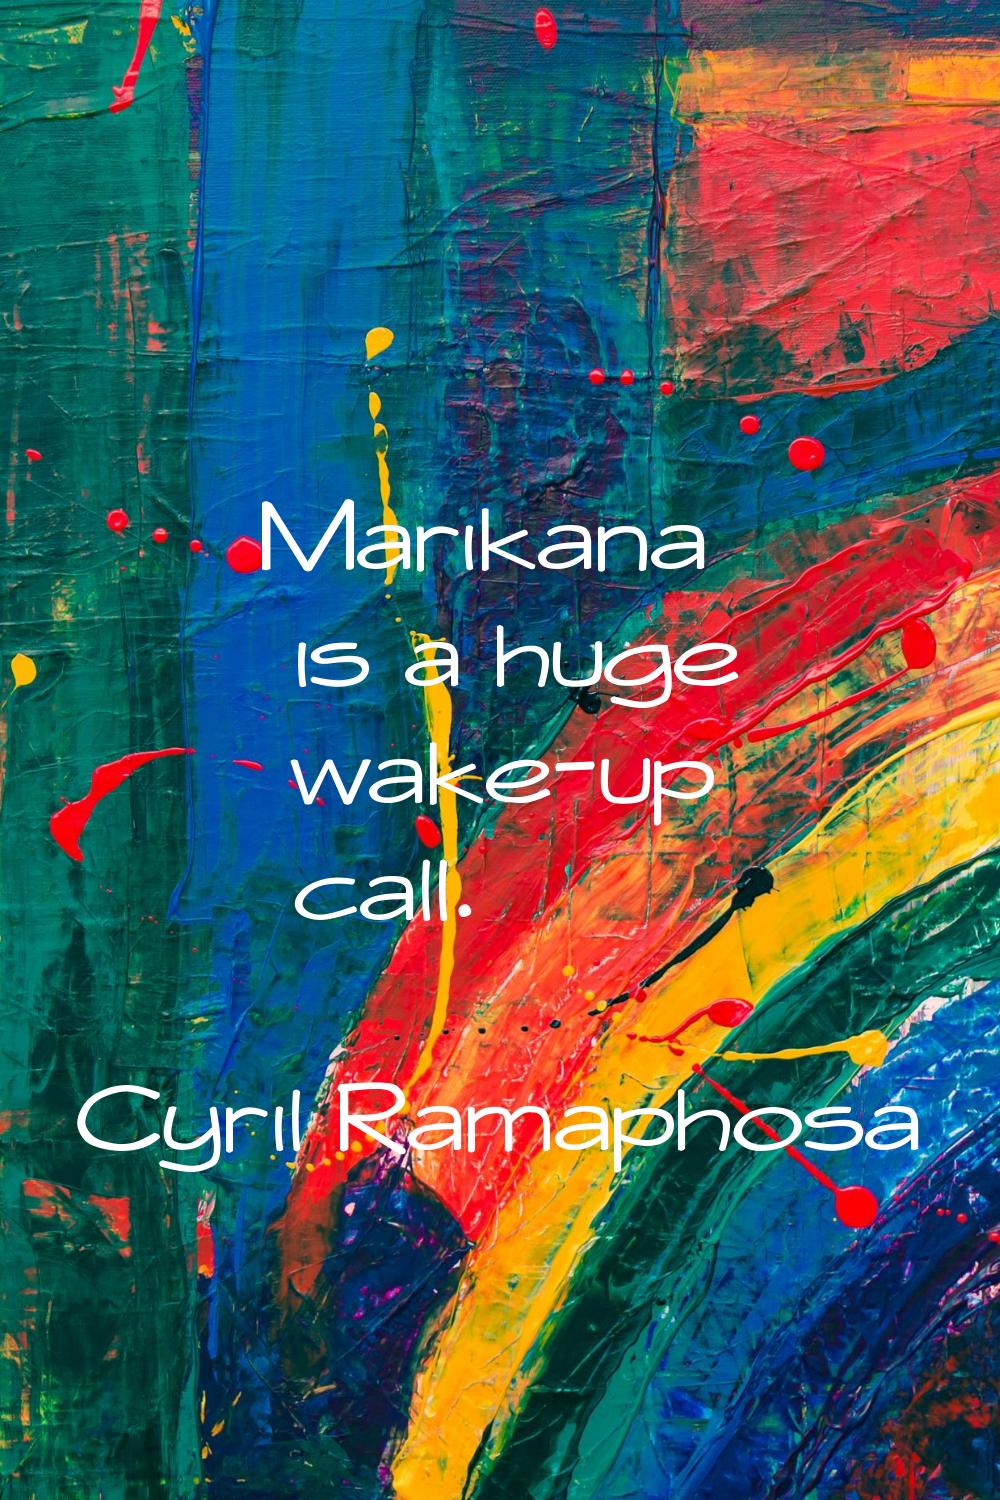 Marikana is a huge wake-up call.